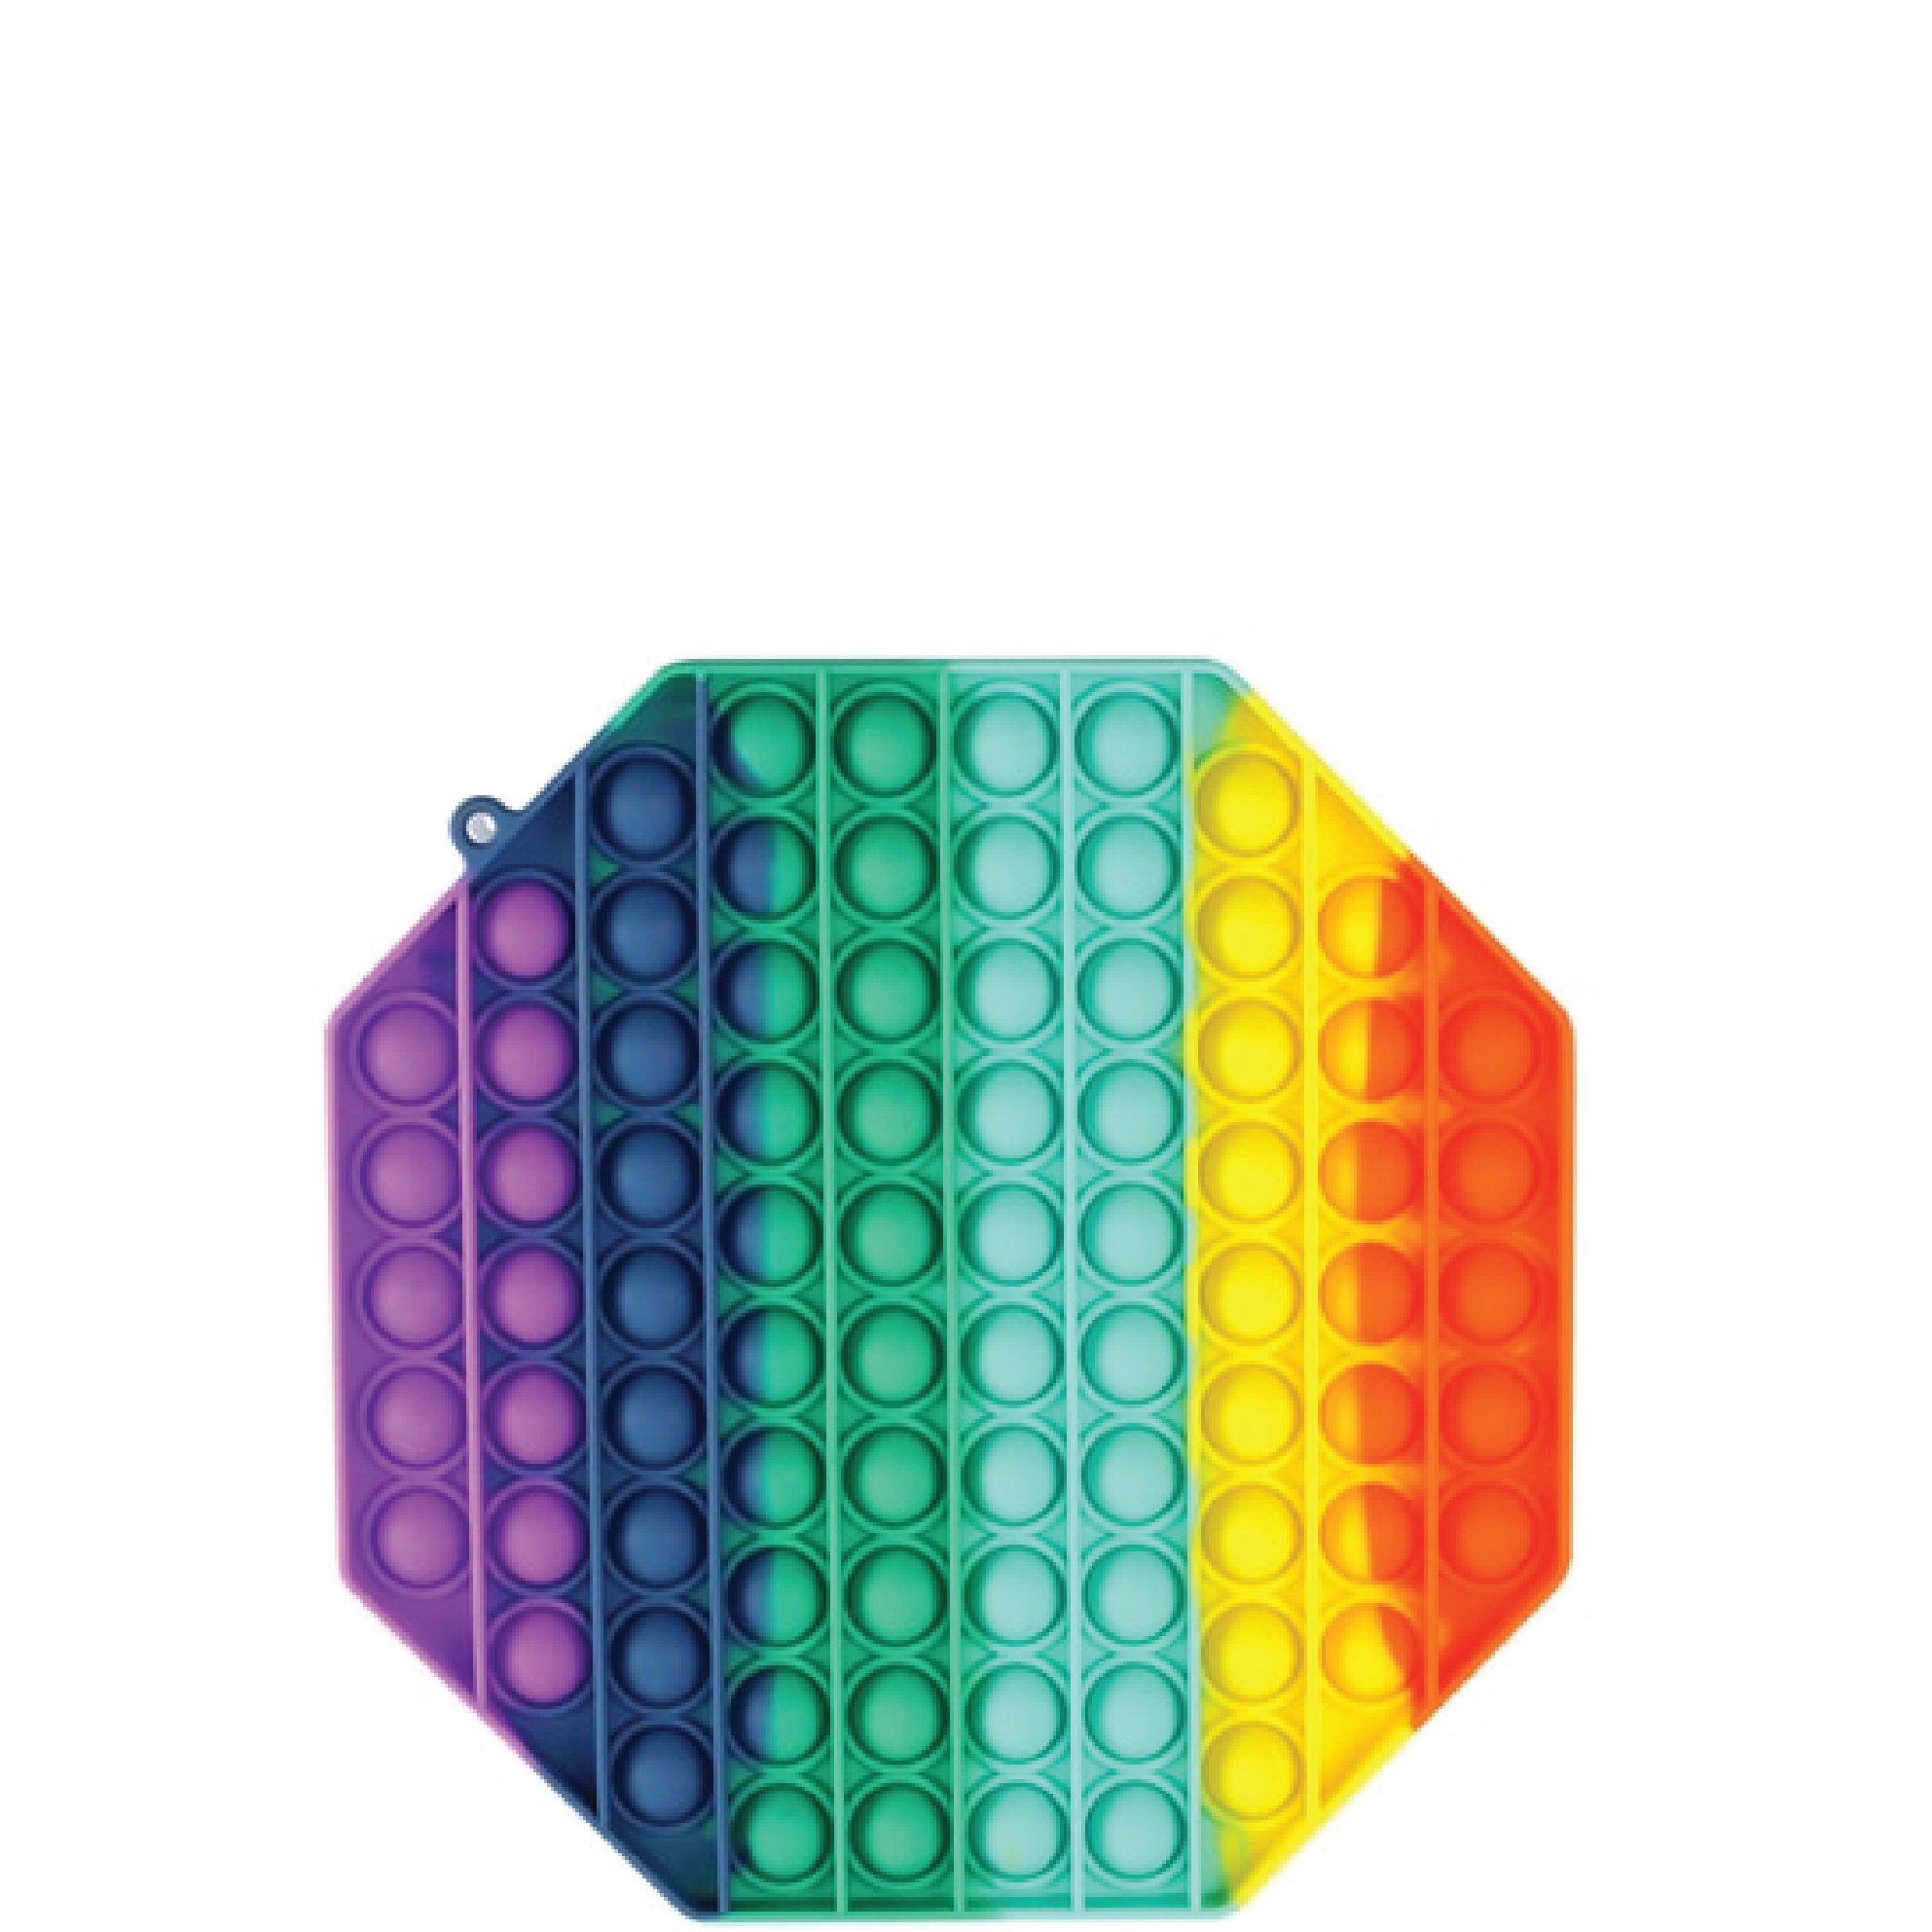 Plop Up! XXL Fidget Toy Rainbow Hegaxon 20cm